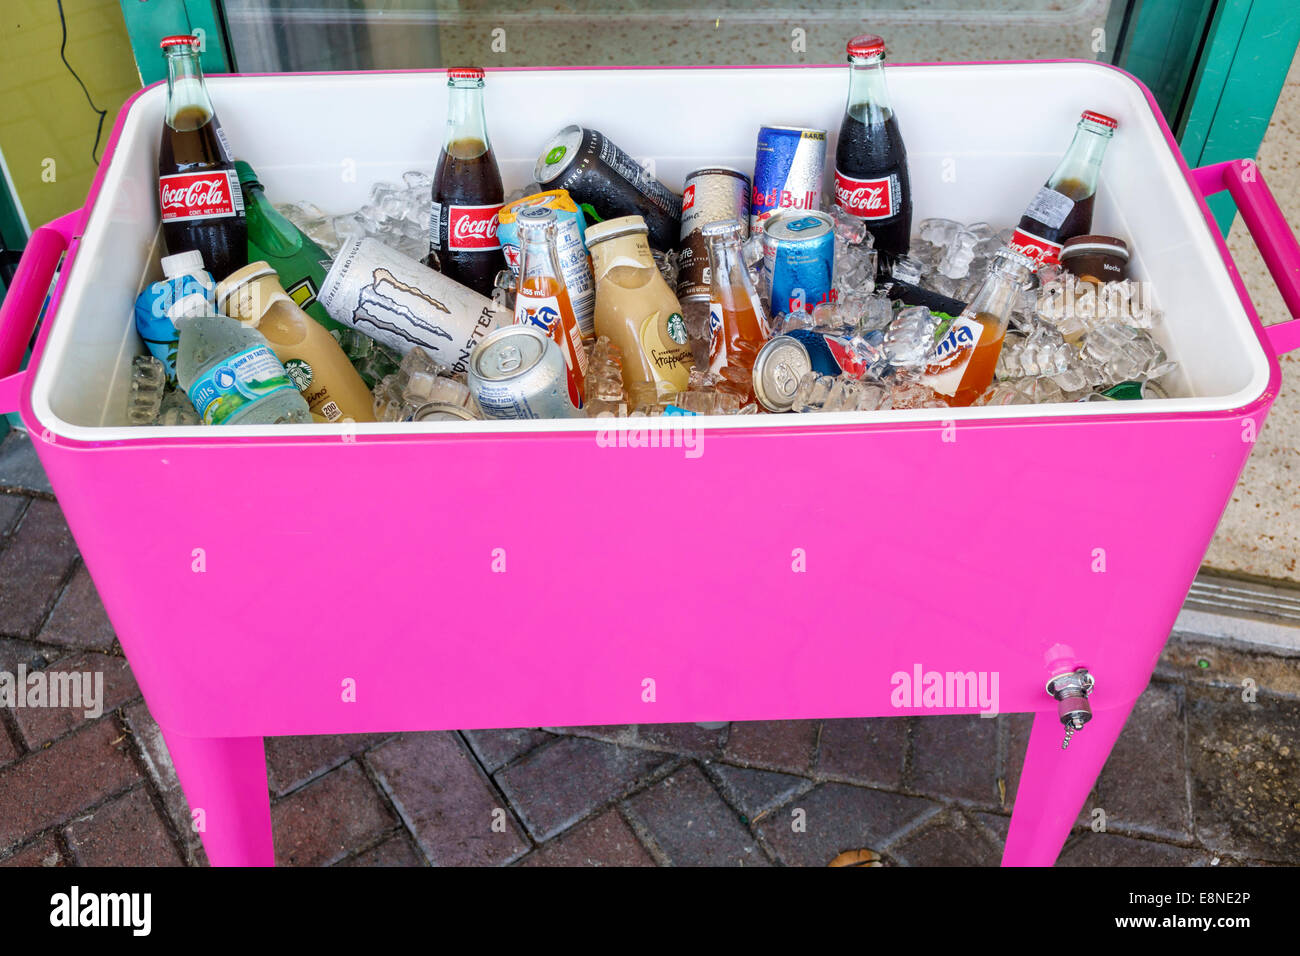 florida-delray-beach-cold-drinks-sale-chest-ice-bottles-cans-coca-E8NE2P.jpg